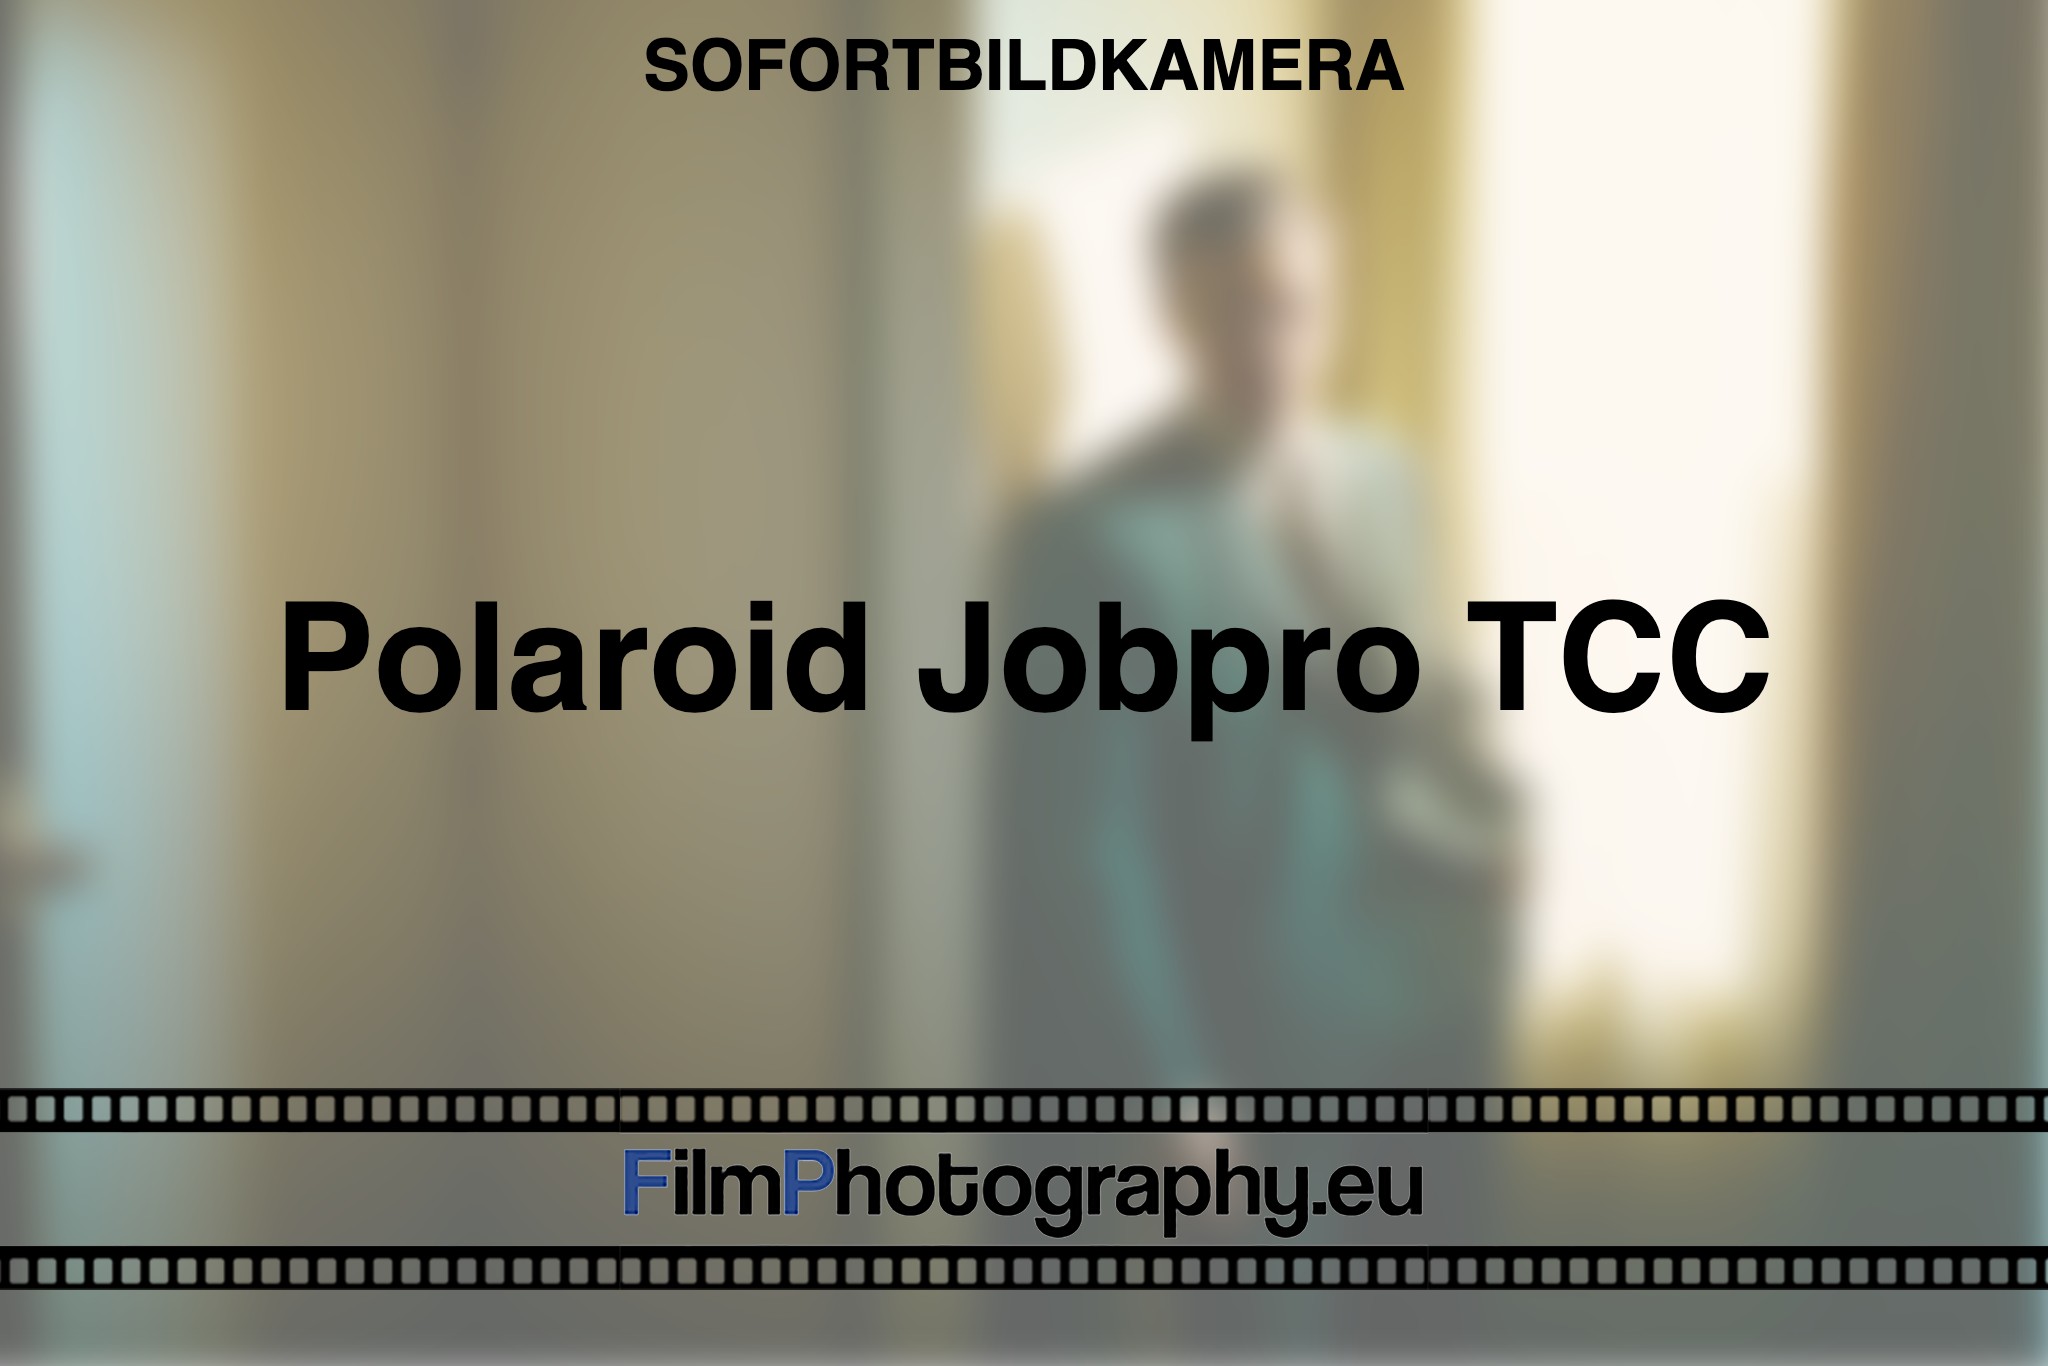 polaroid-jobpro-tcc-sofortbildkamera-bnv